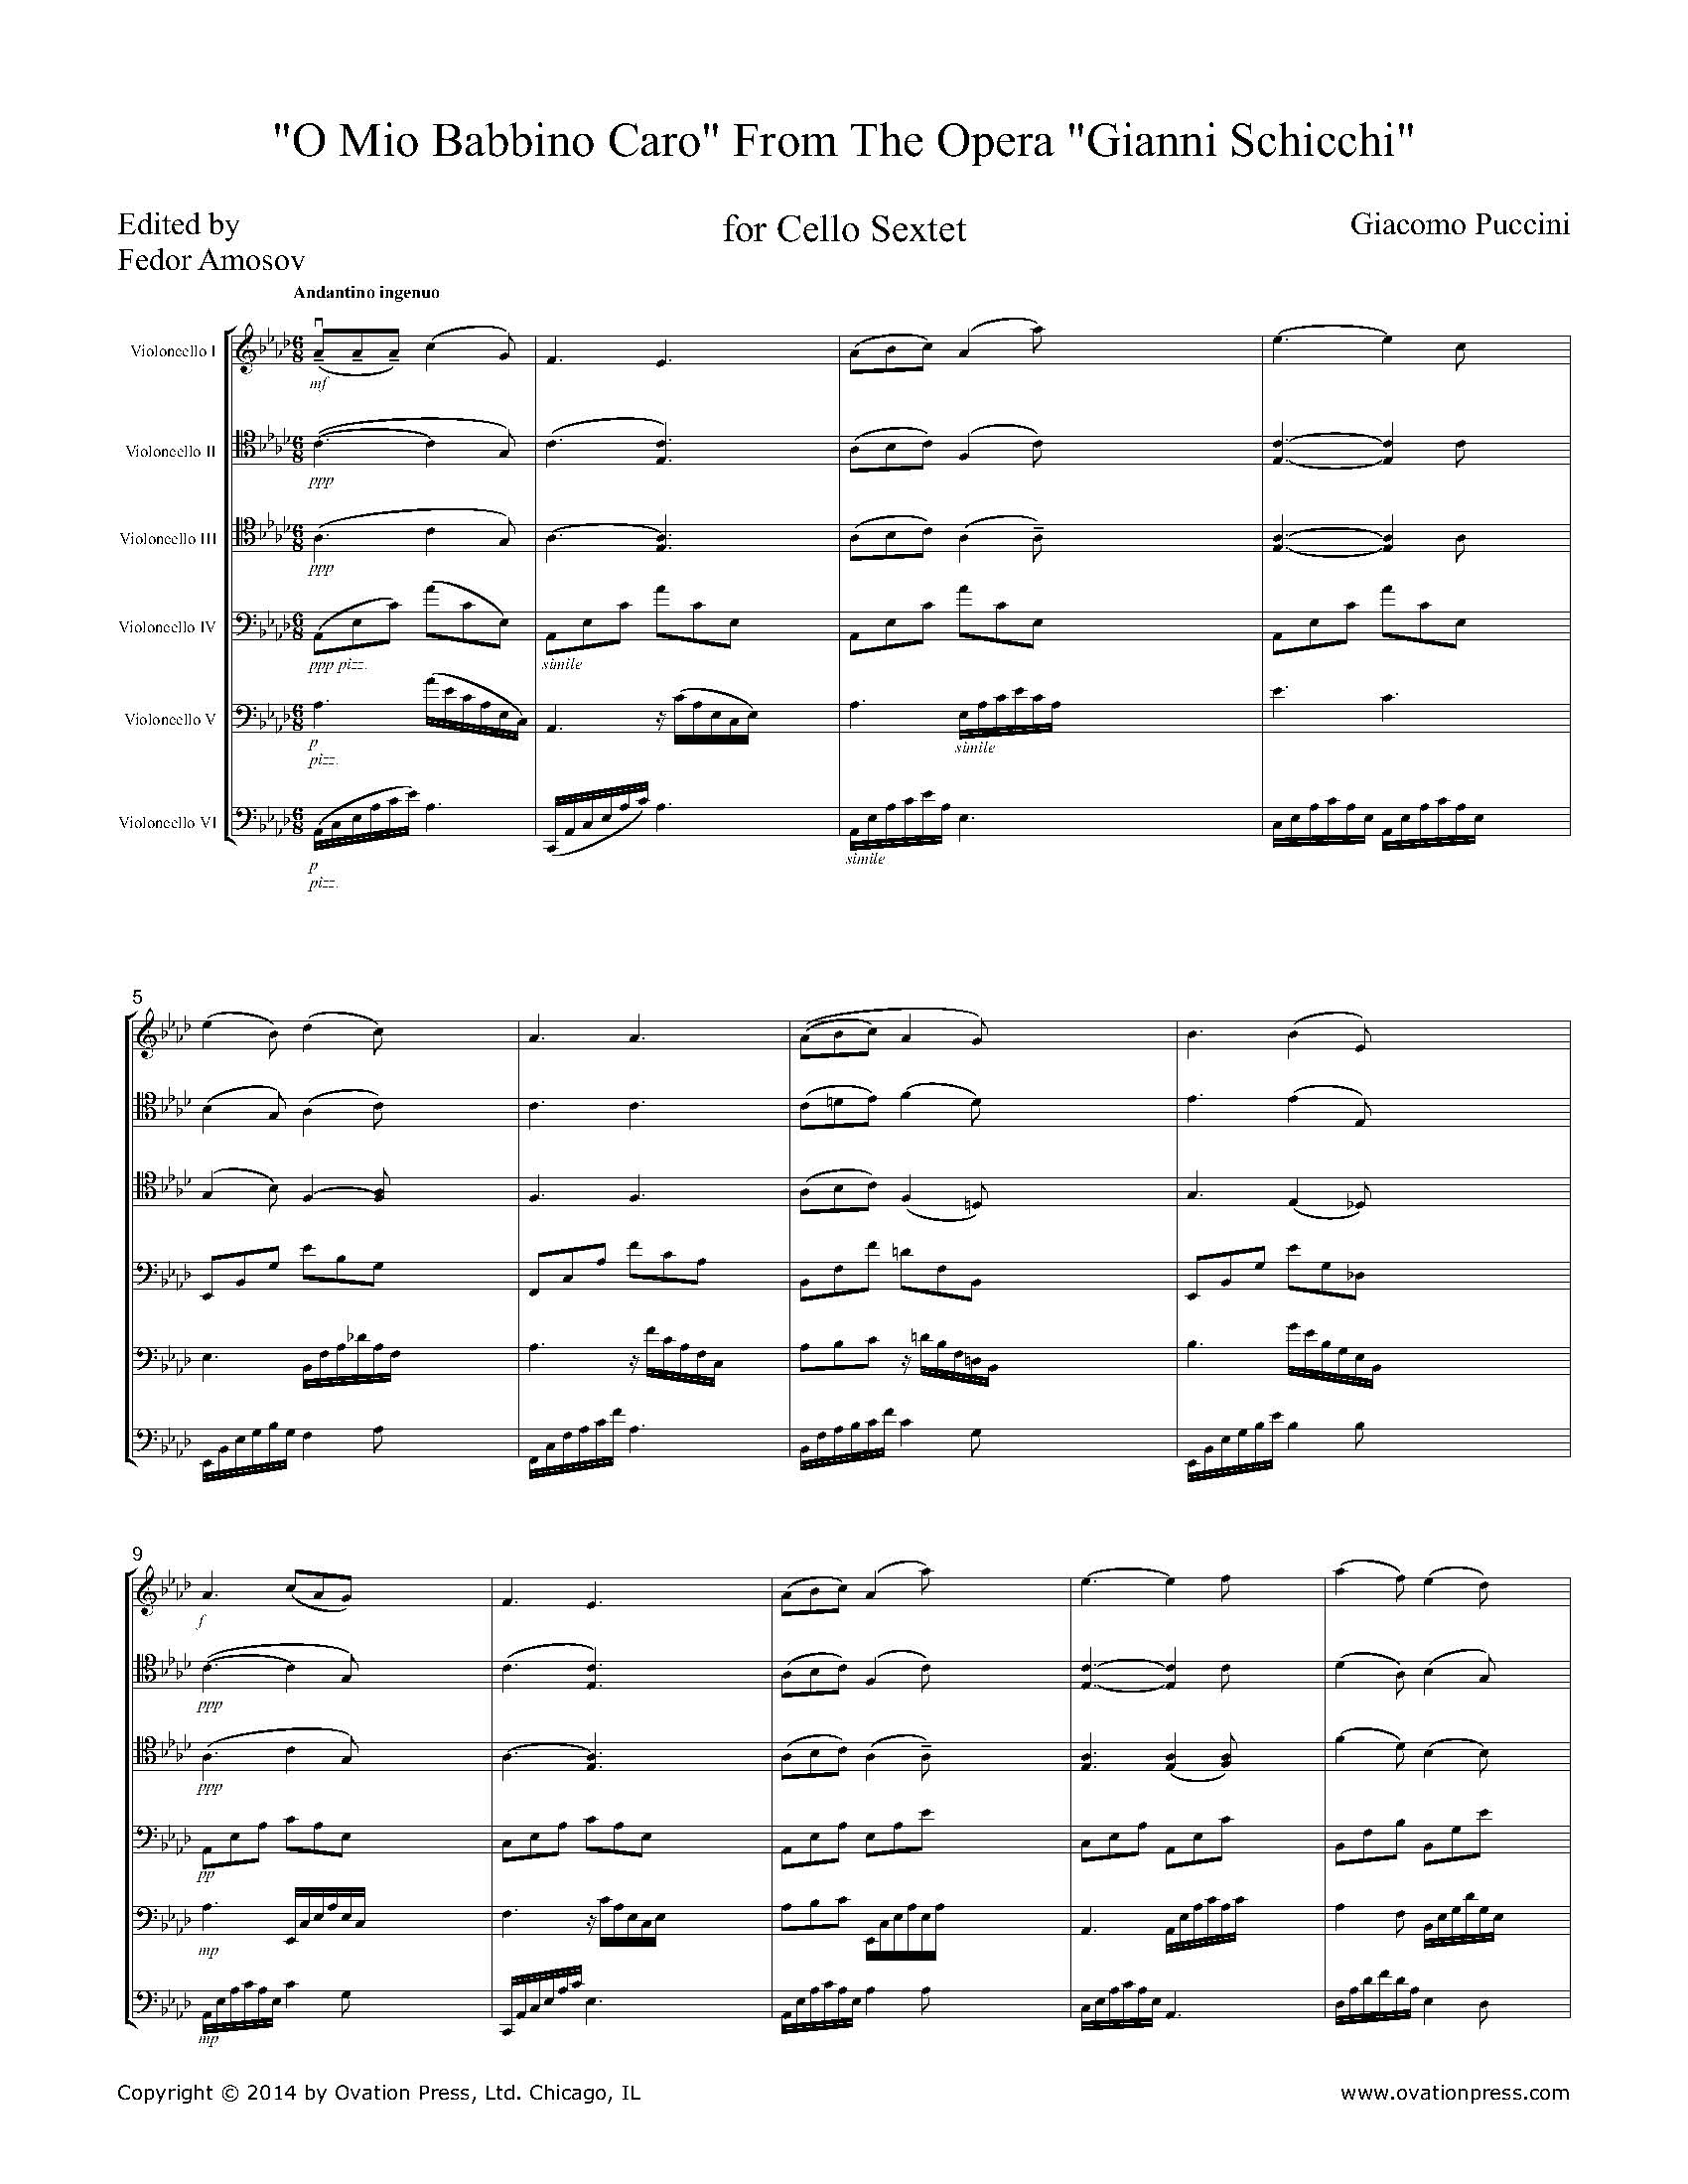 Puccini "O Mio Babbino Caro" from "Gianni Schicchi" Arranged for Cello Sextet